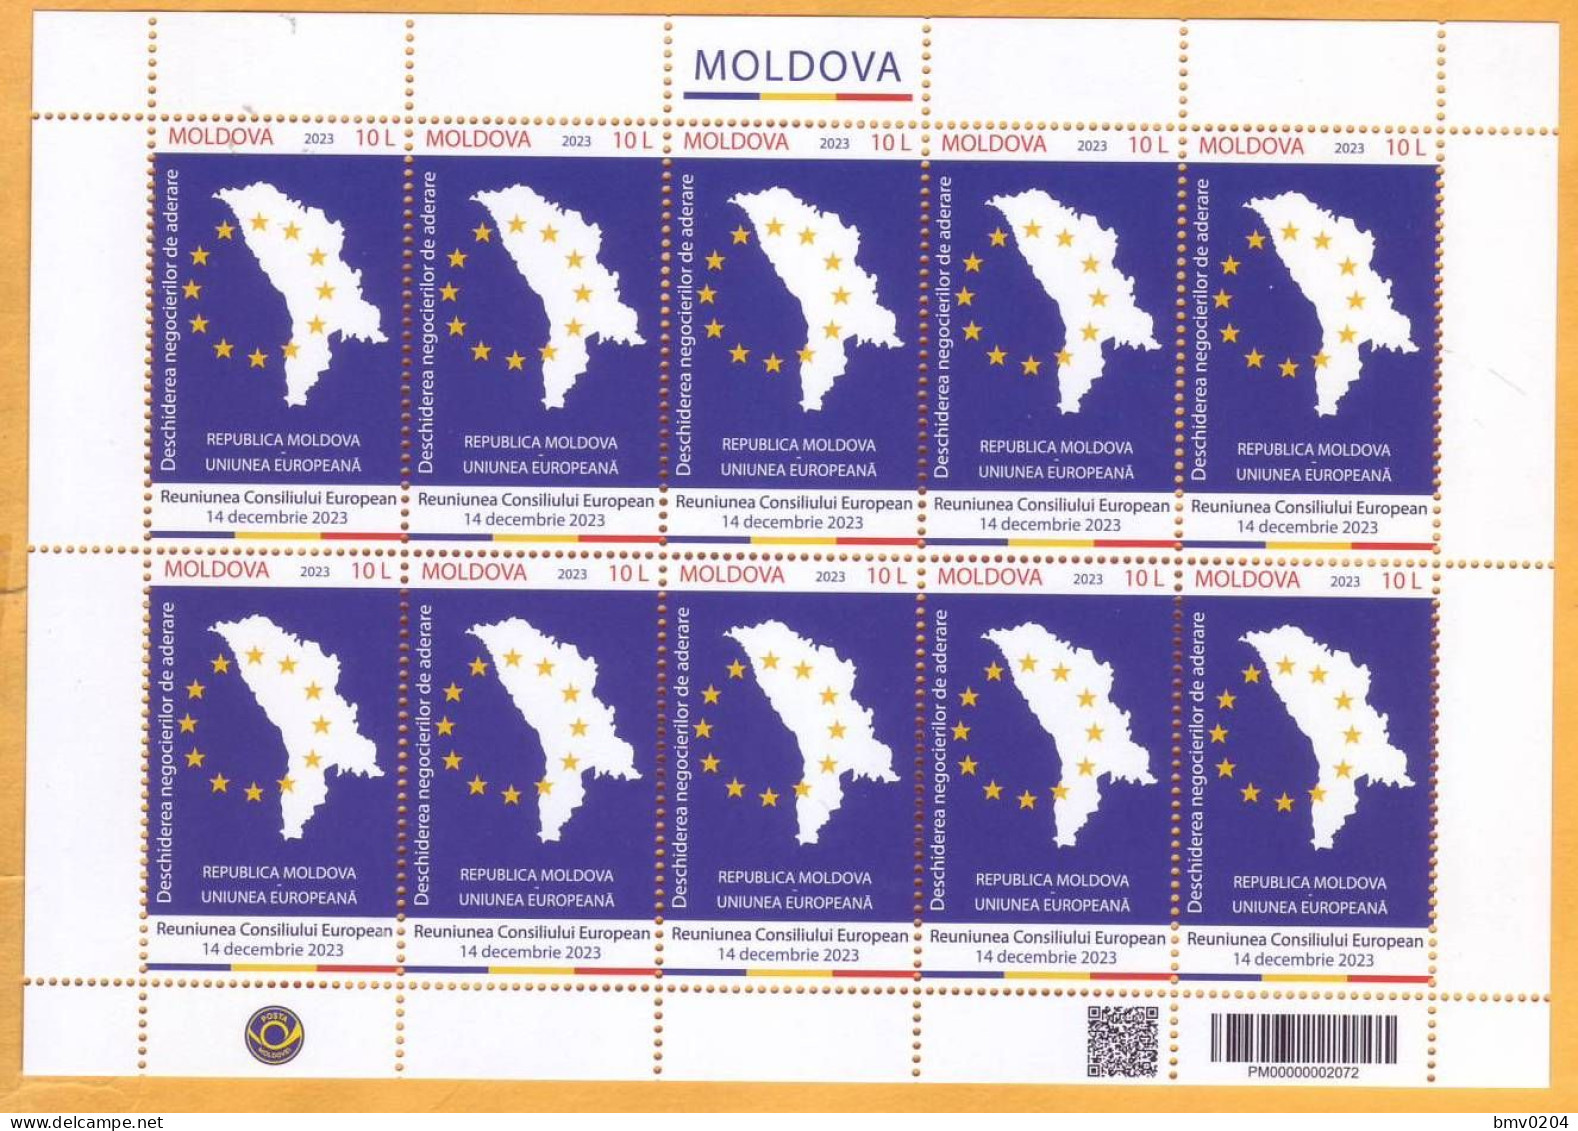 2023  Moldova  Sheet The Opening Of Accession Negotiations REPUBLIC OF MOLDOVA - EUROPEAN UNION  Mint - Moldova